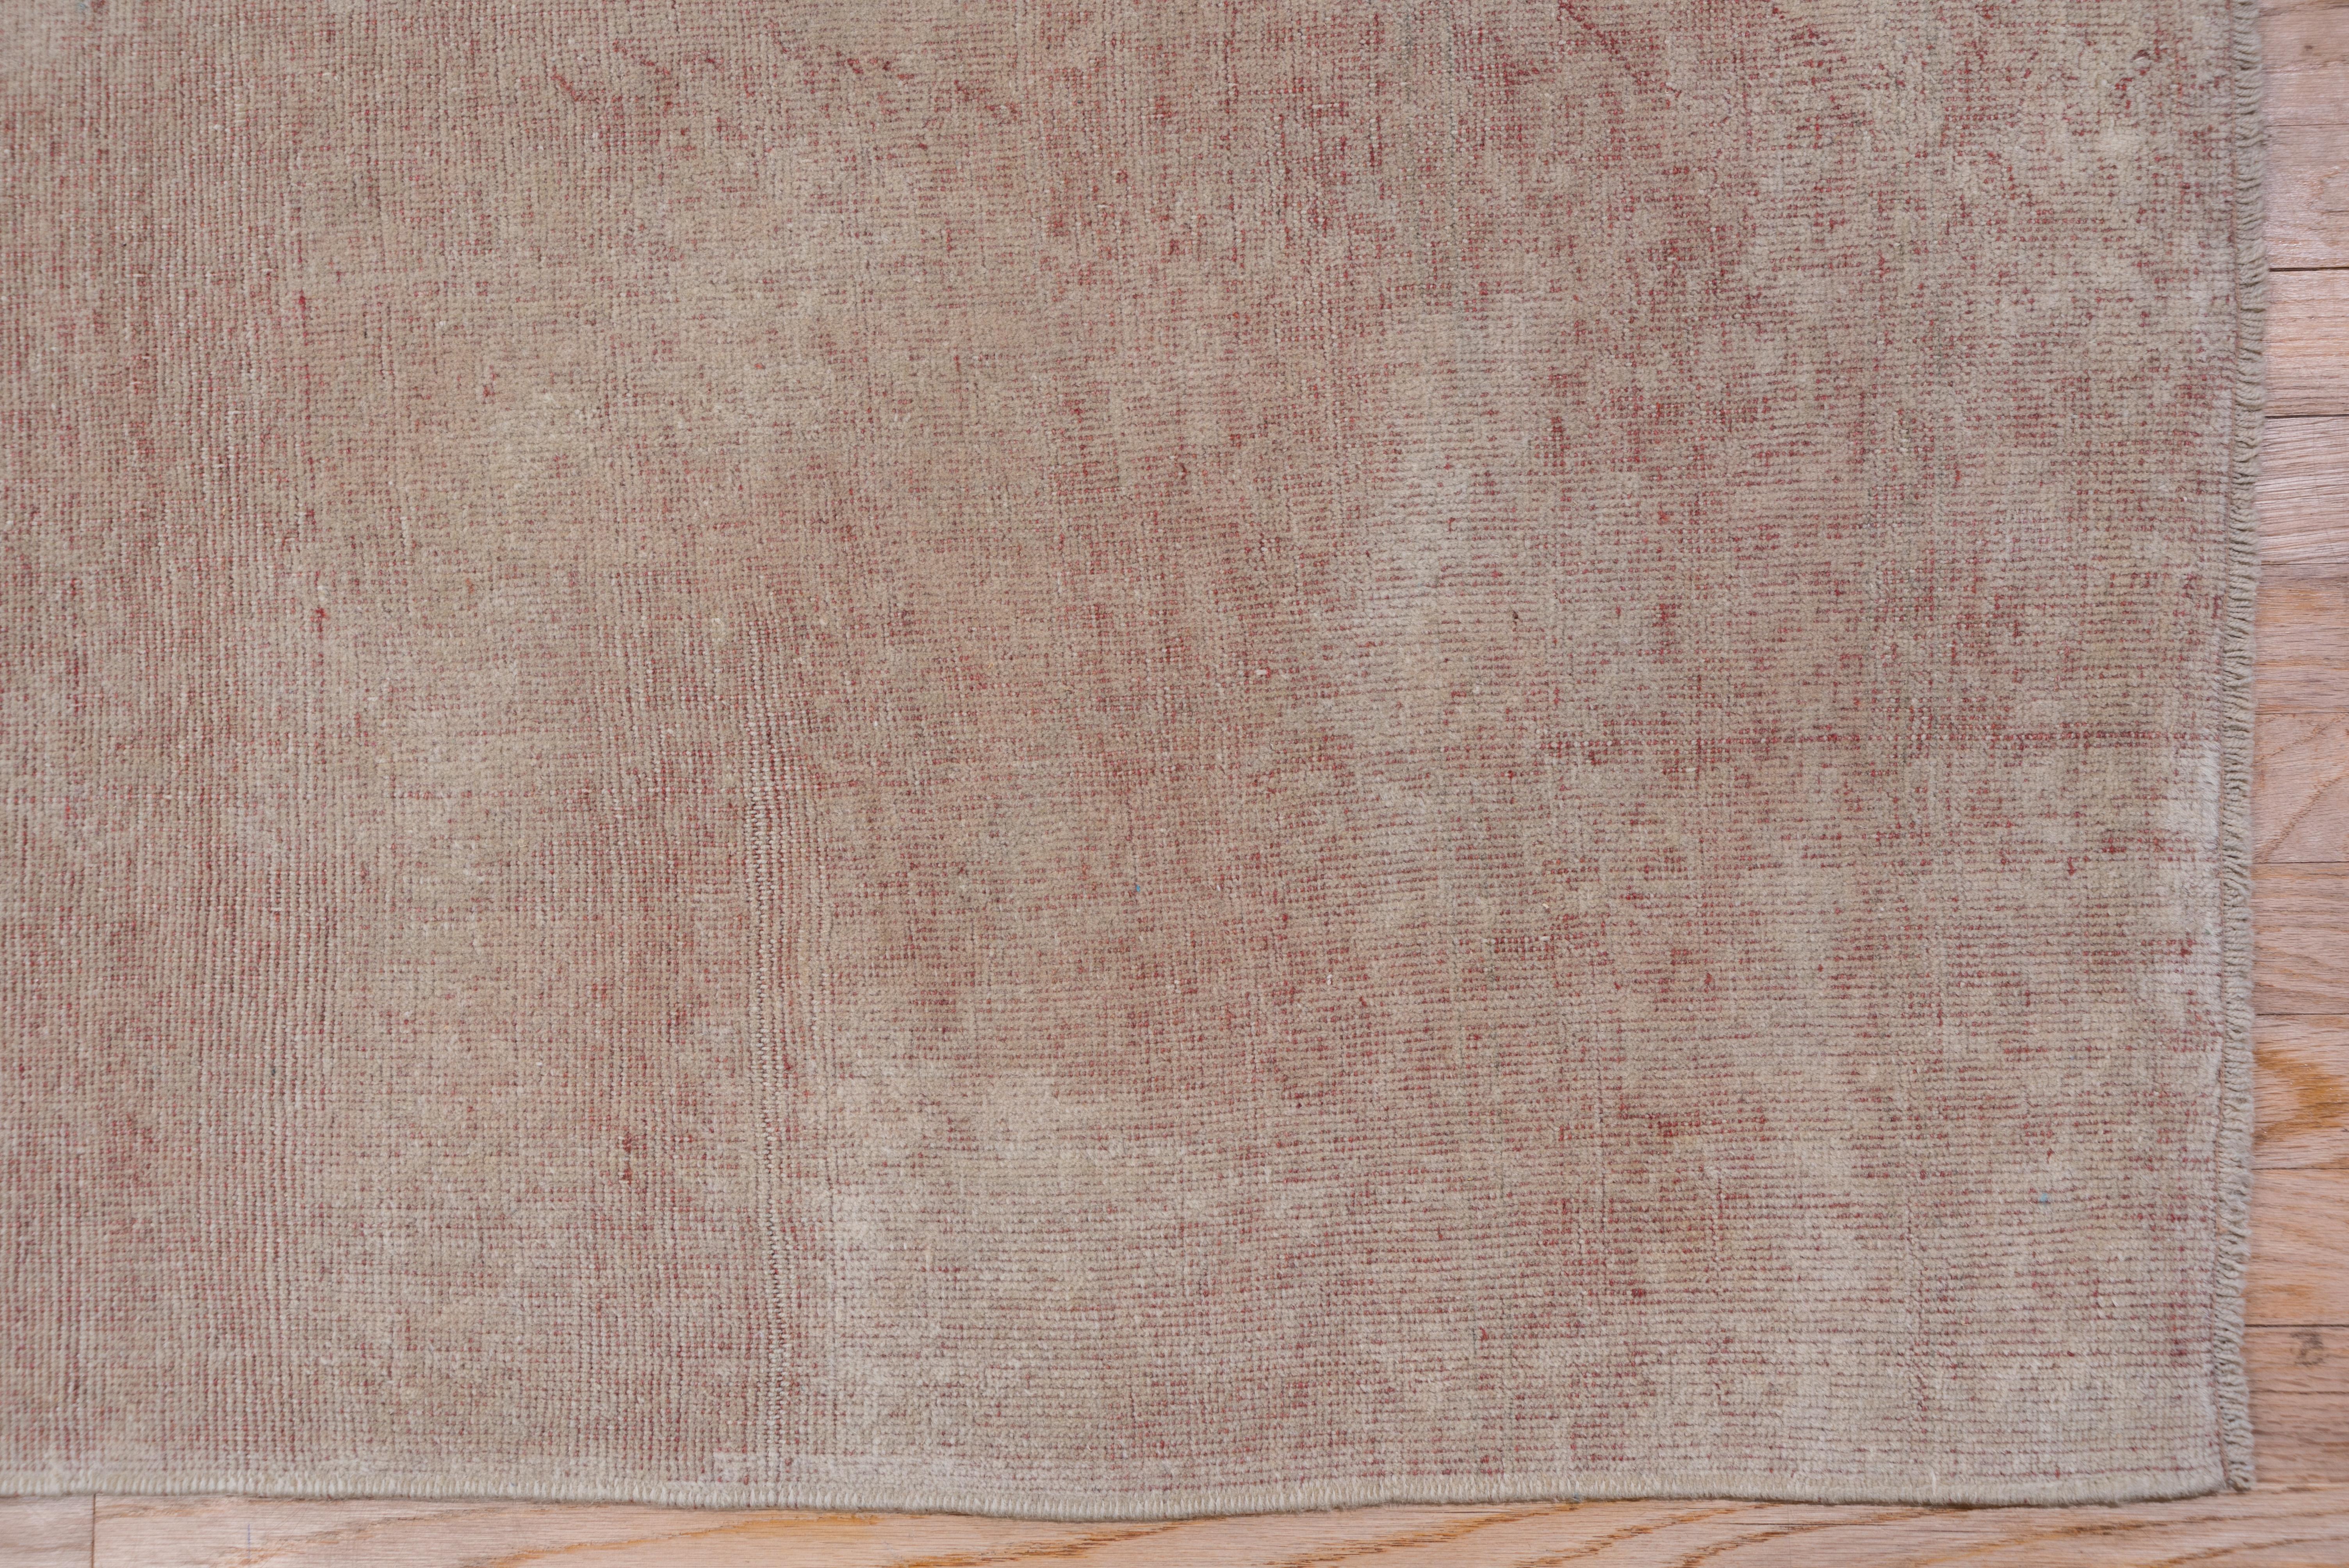 Vintage Oushak Carpet, Light Pink Accents, Solid Field For Sale 1